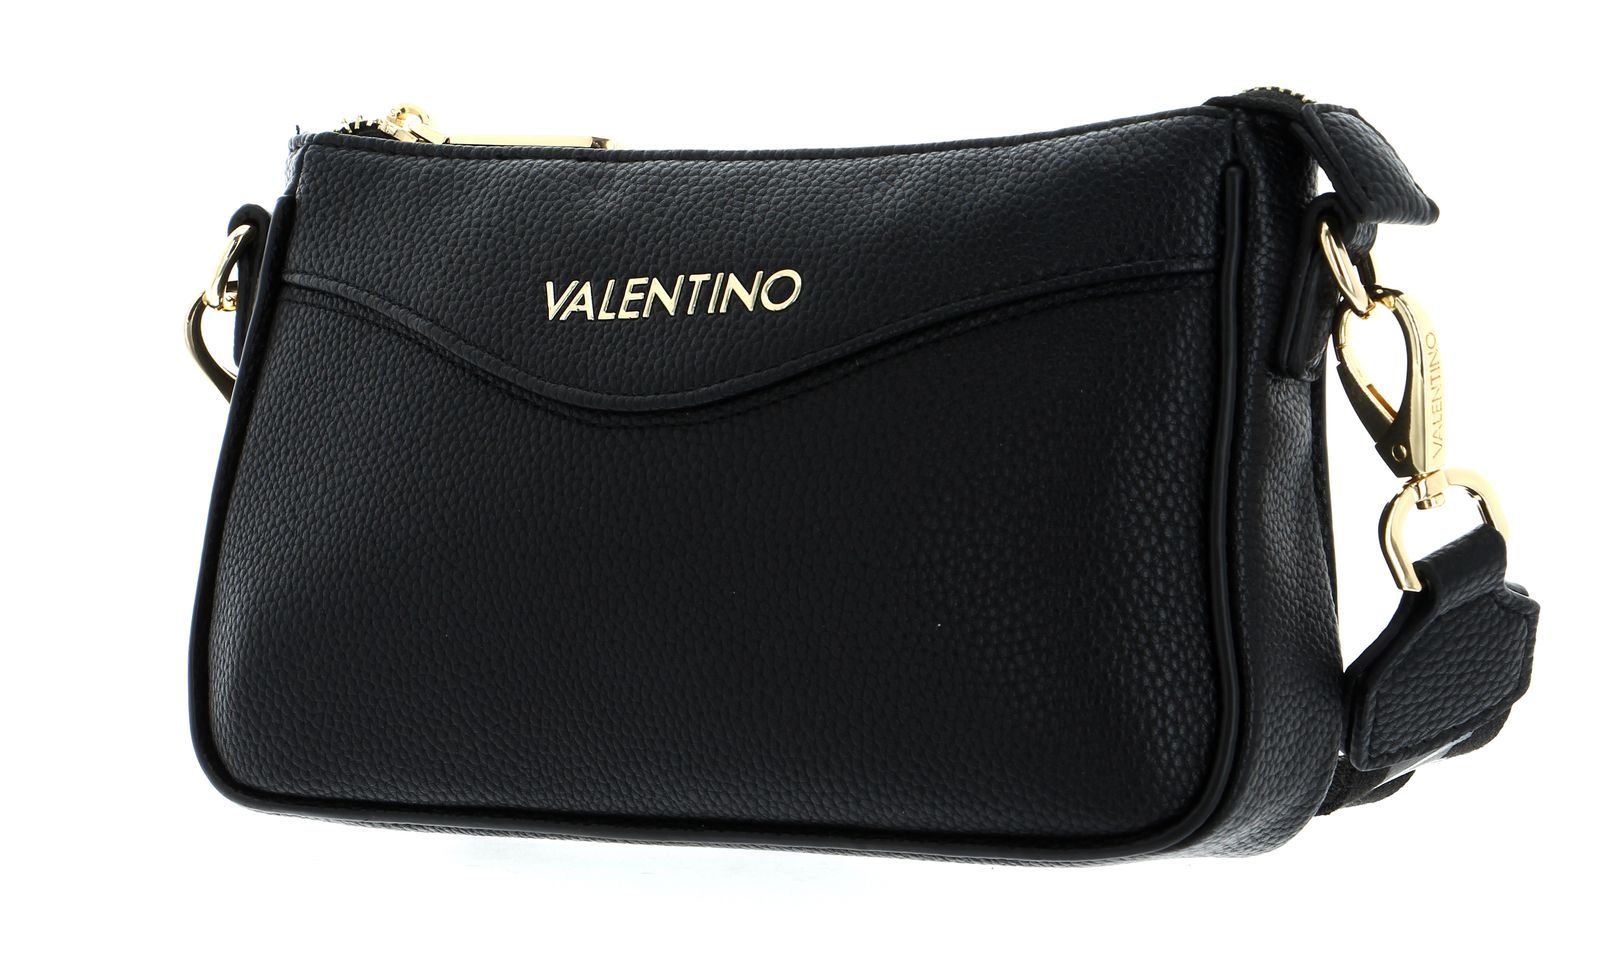 VALENTINO Cinnamon Re Crossbag Nero | Buy bags, purses & accessories ...